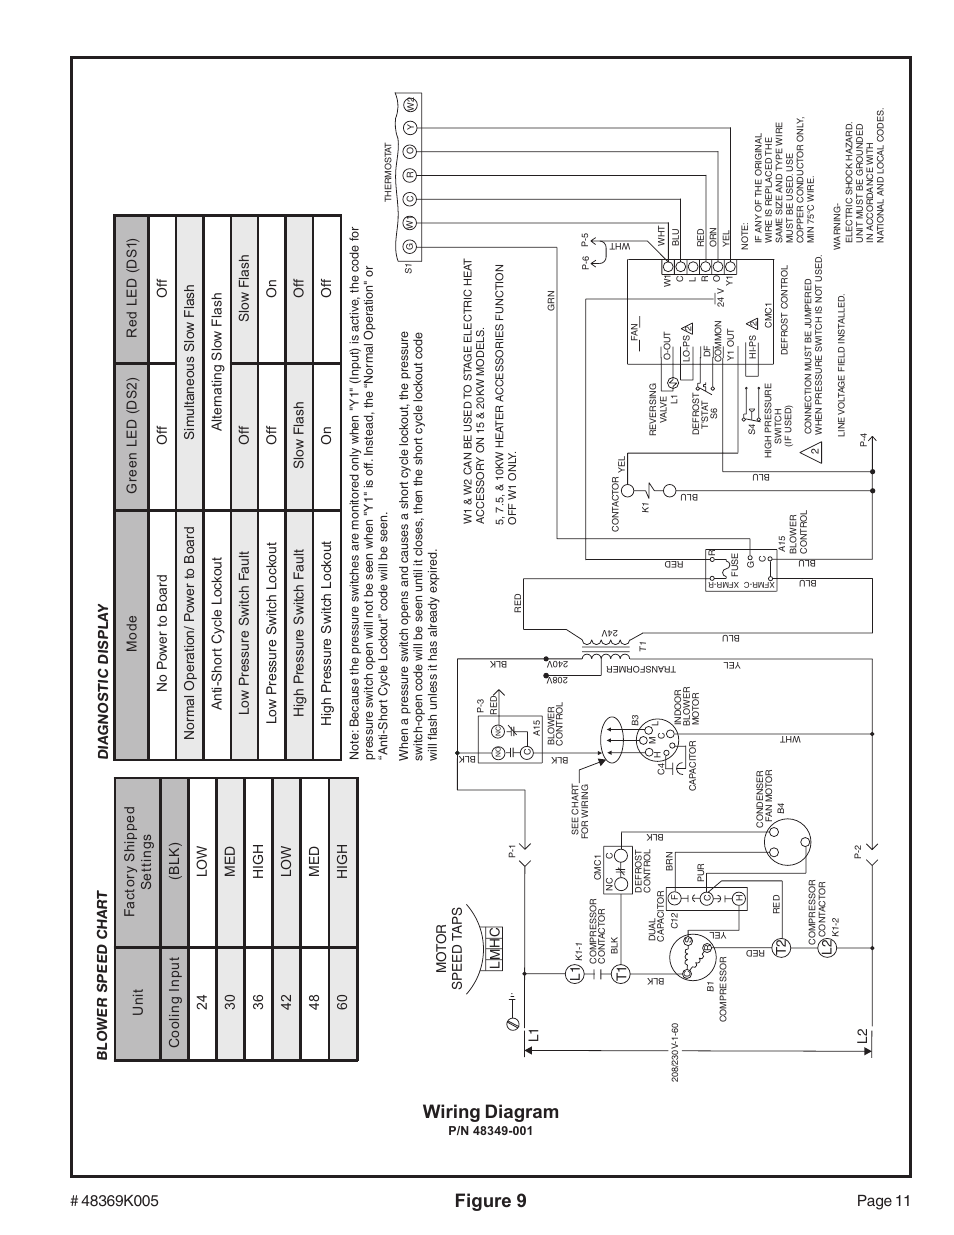 Figure 9 wiring diagram | Ducane (HVAC) (2/4)SH13 User Manual | Page 11 / 12 Air Conditioning Wiring Diagram Manuals Directory